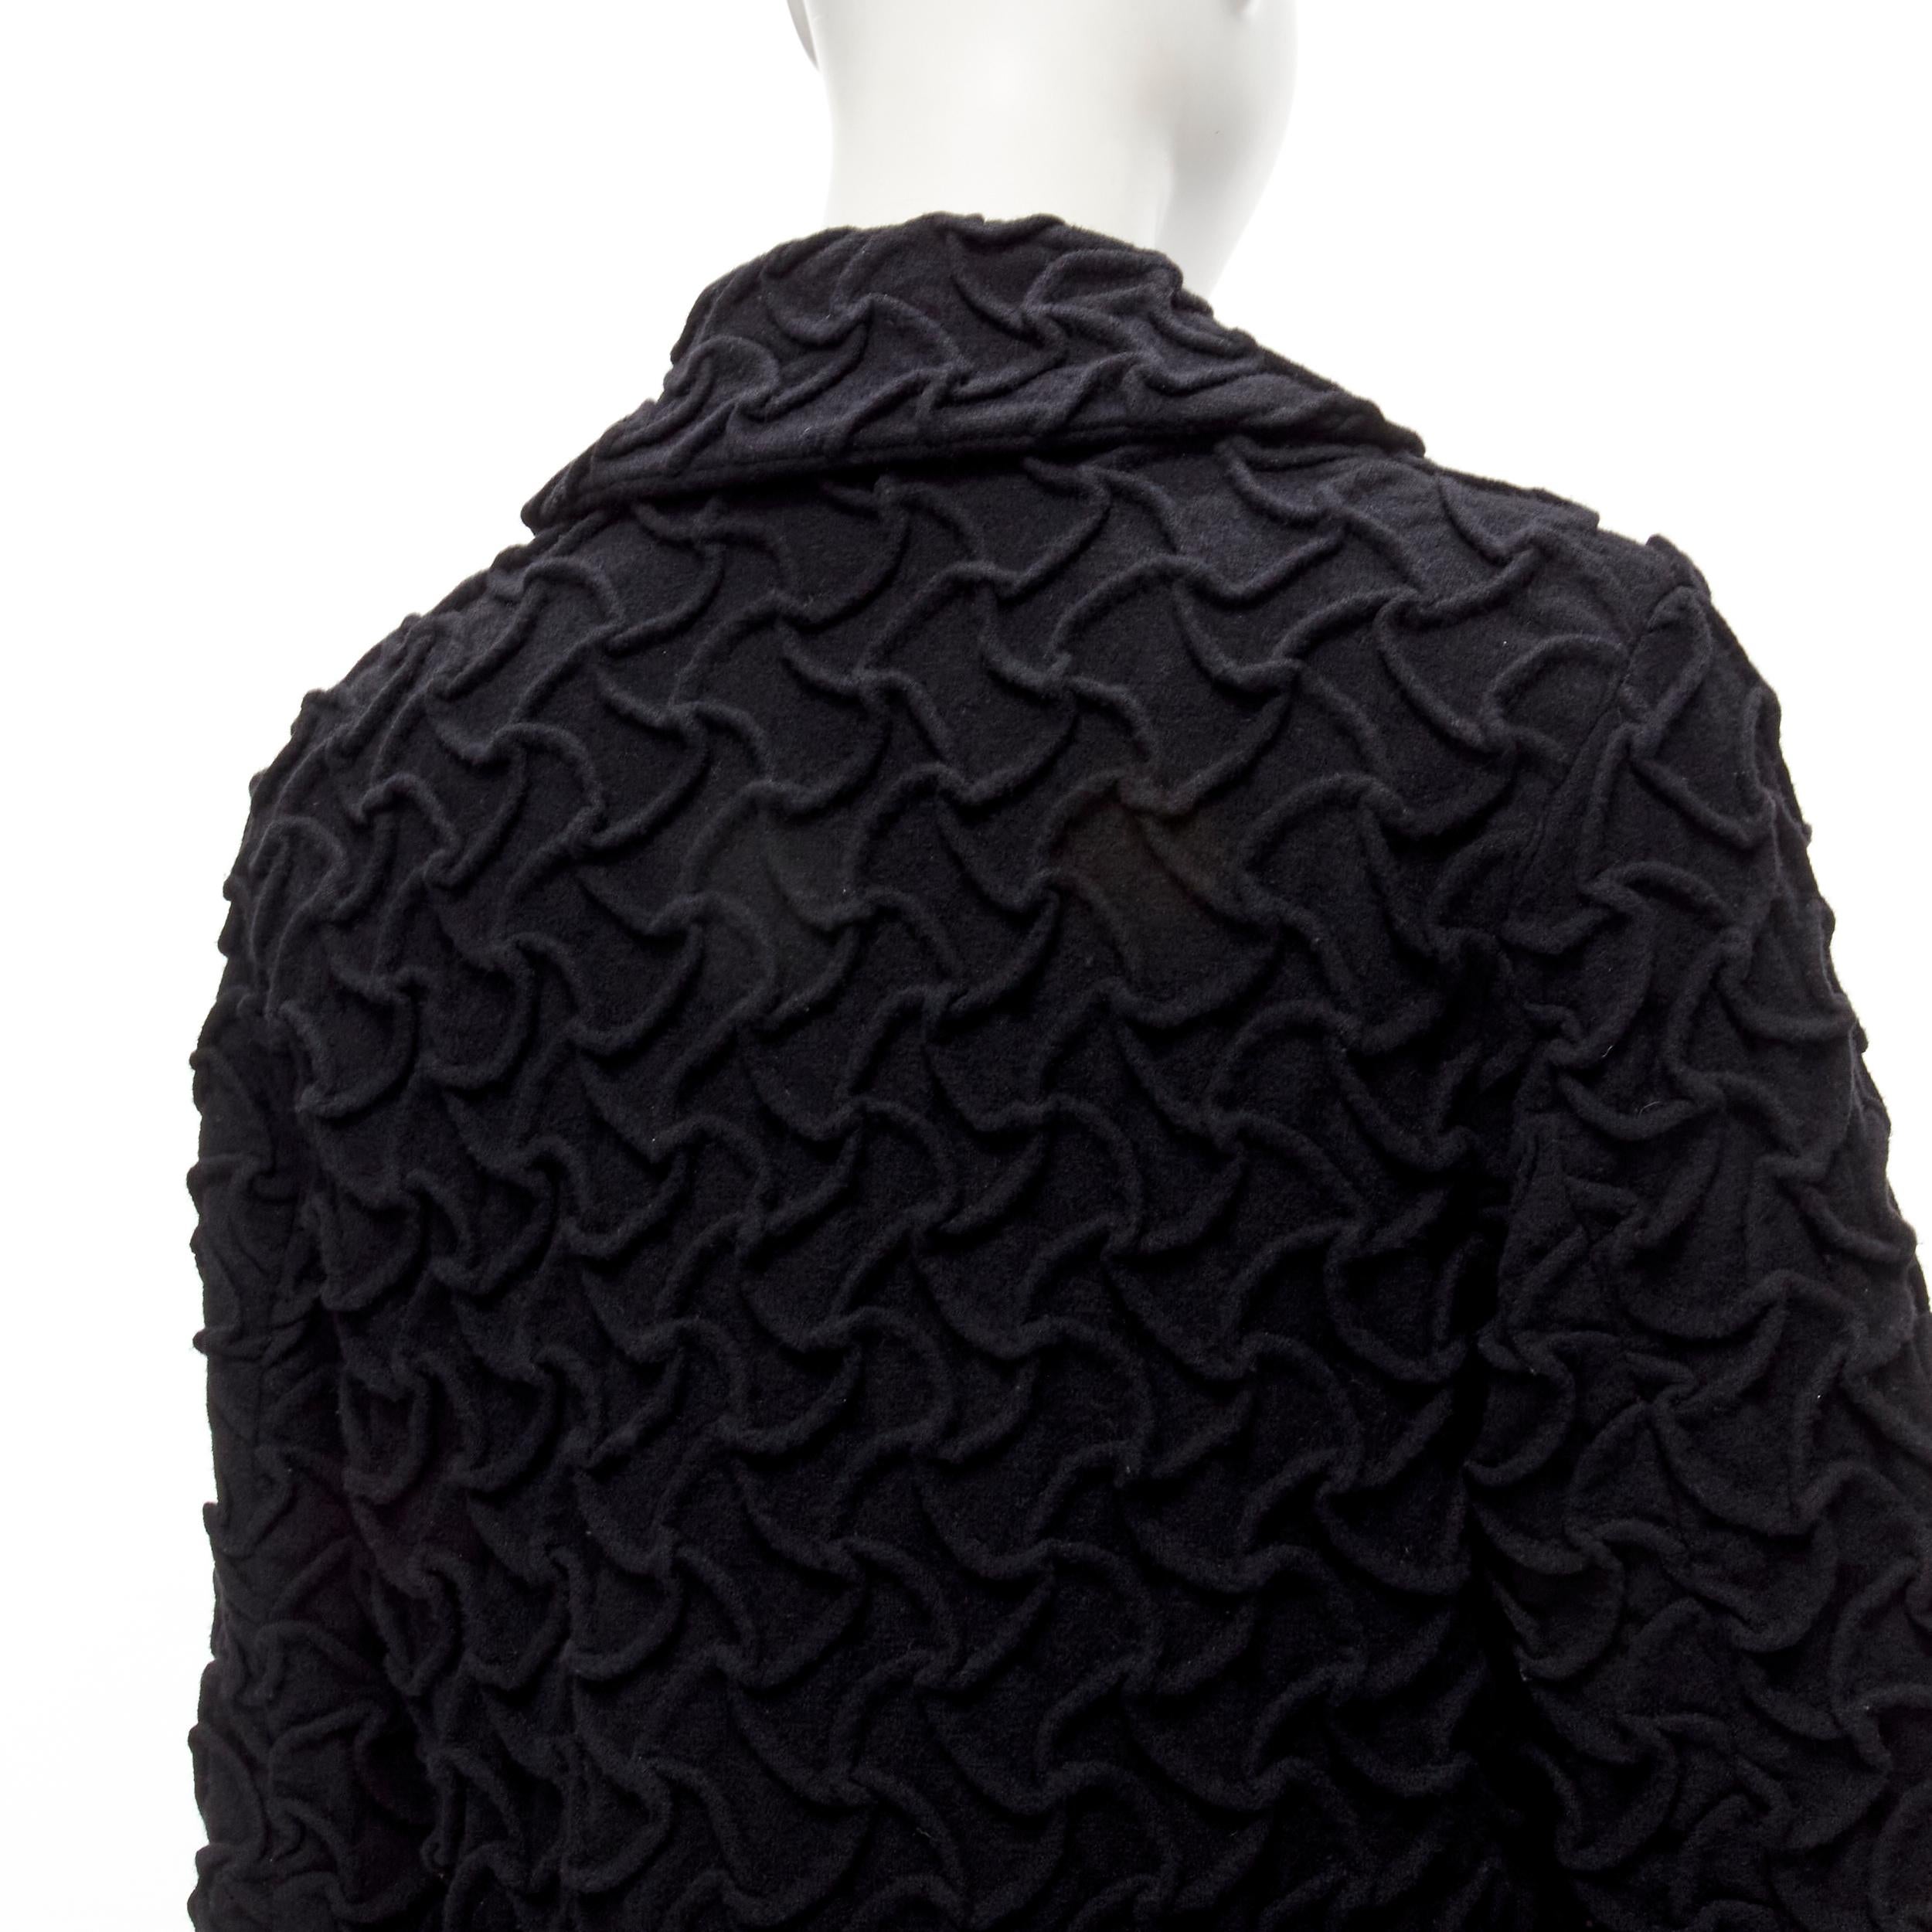 ISSEY MIYAKE 100% wool black textured single breasted long jacket coat JP2 M For Sale 5